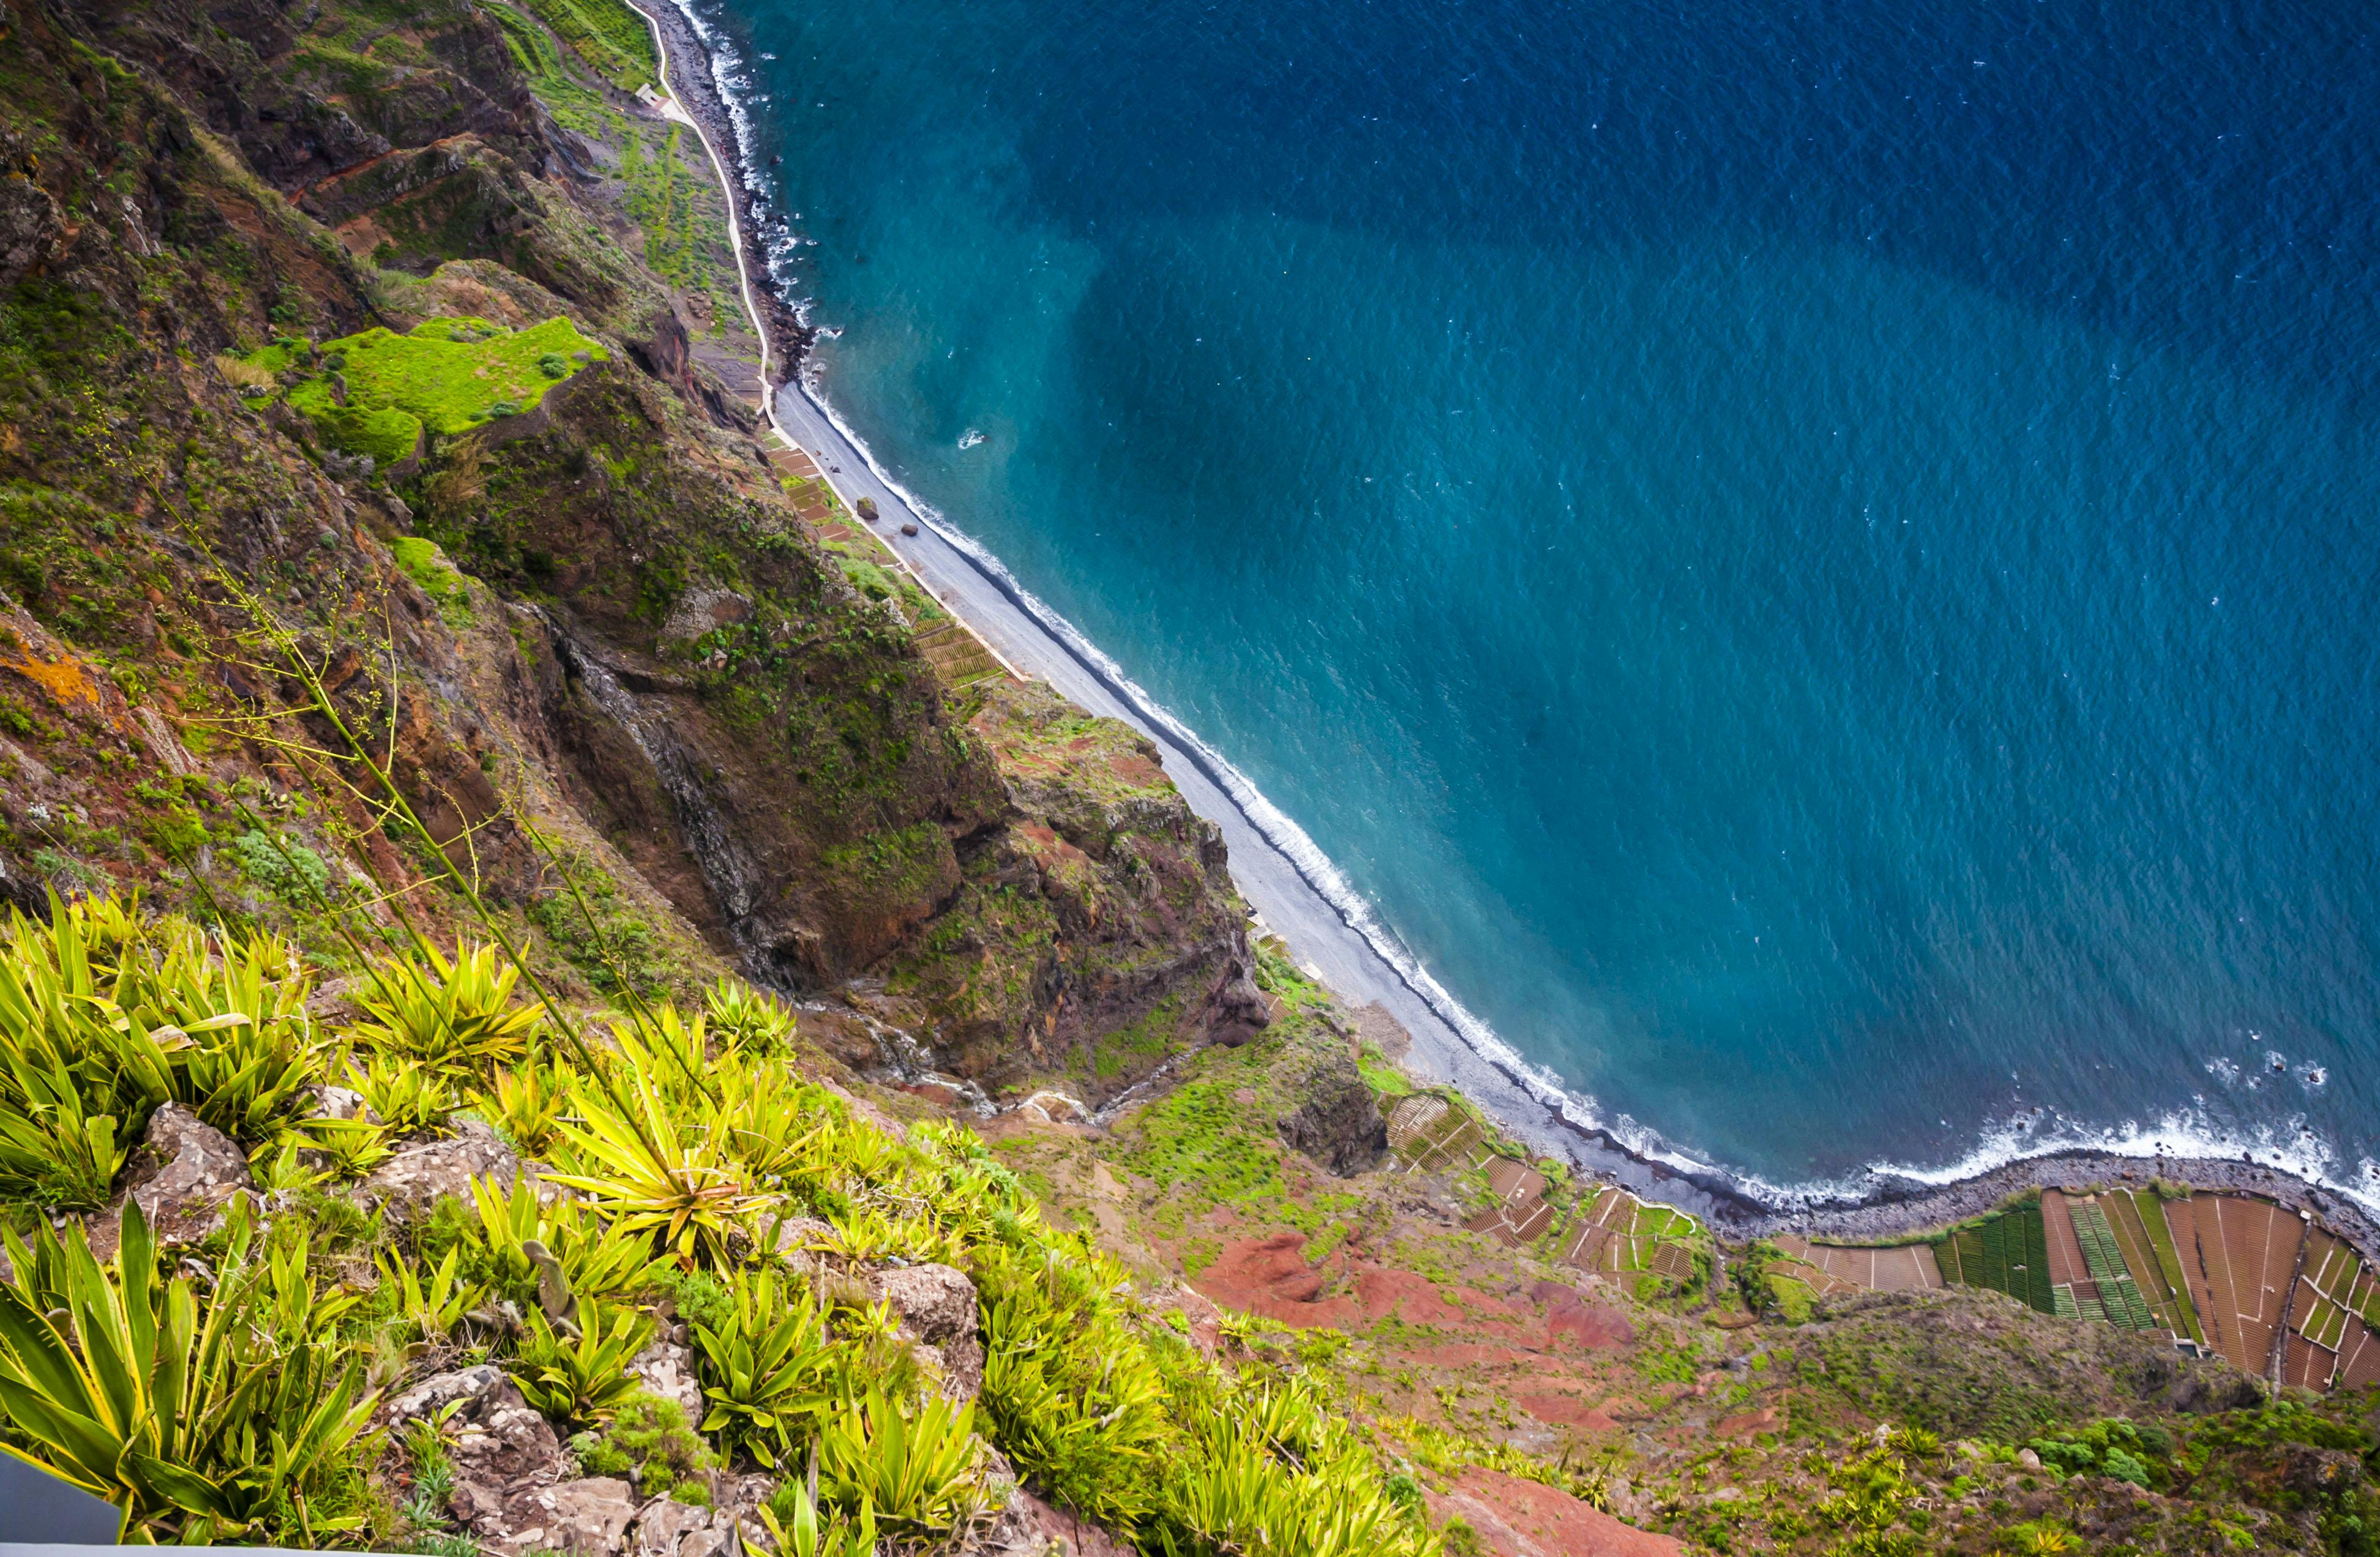 Cabo Girão, the Europe's Highest Cliff